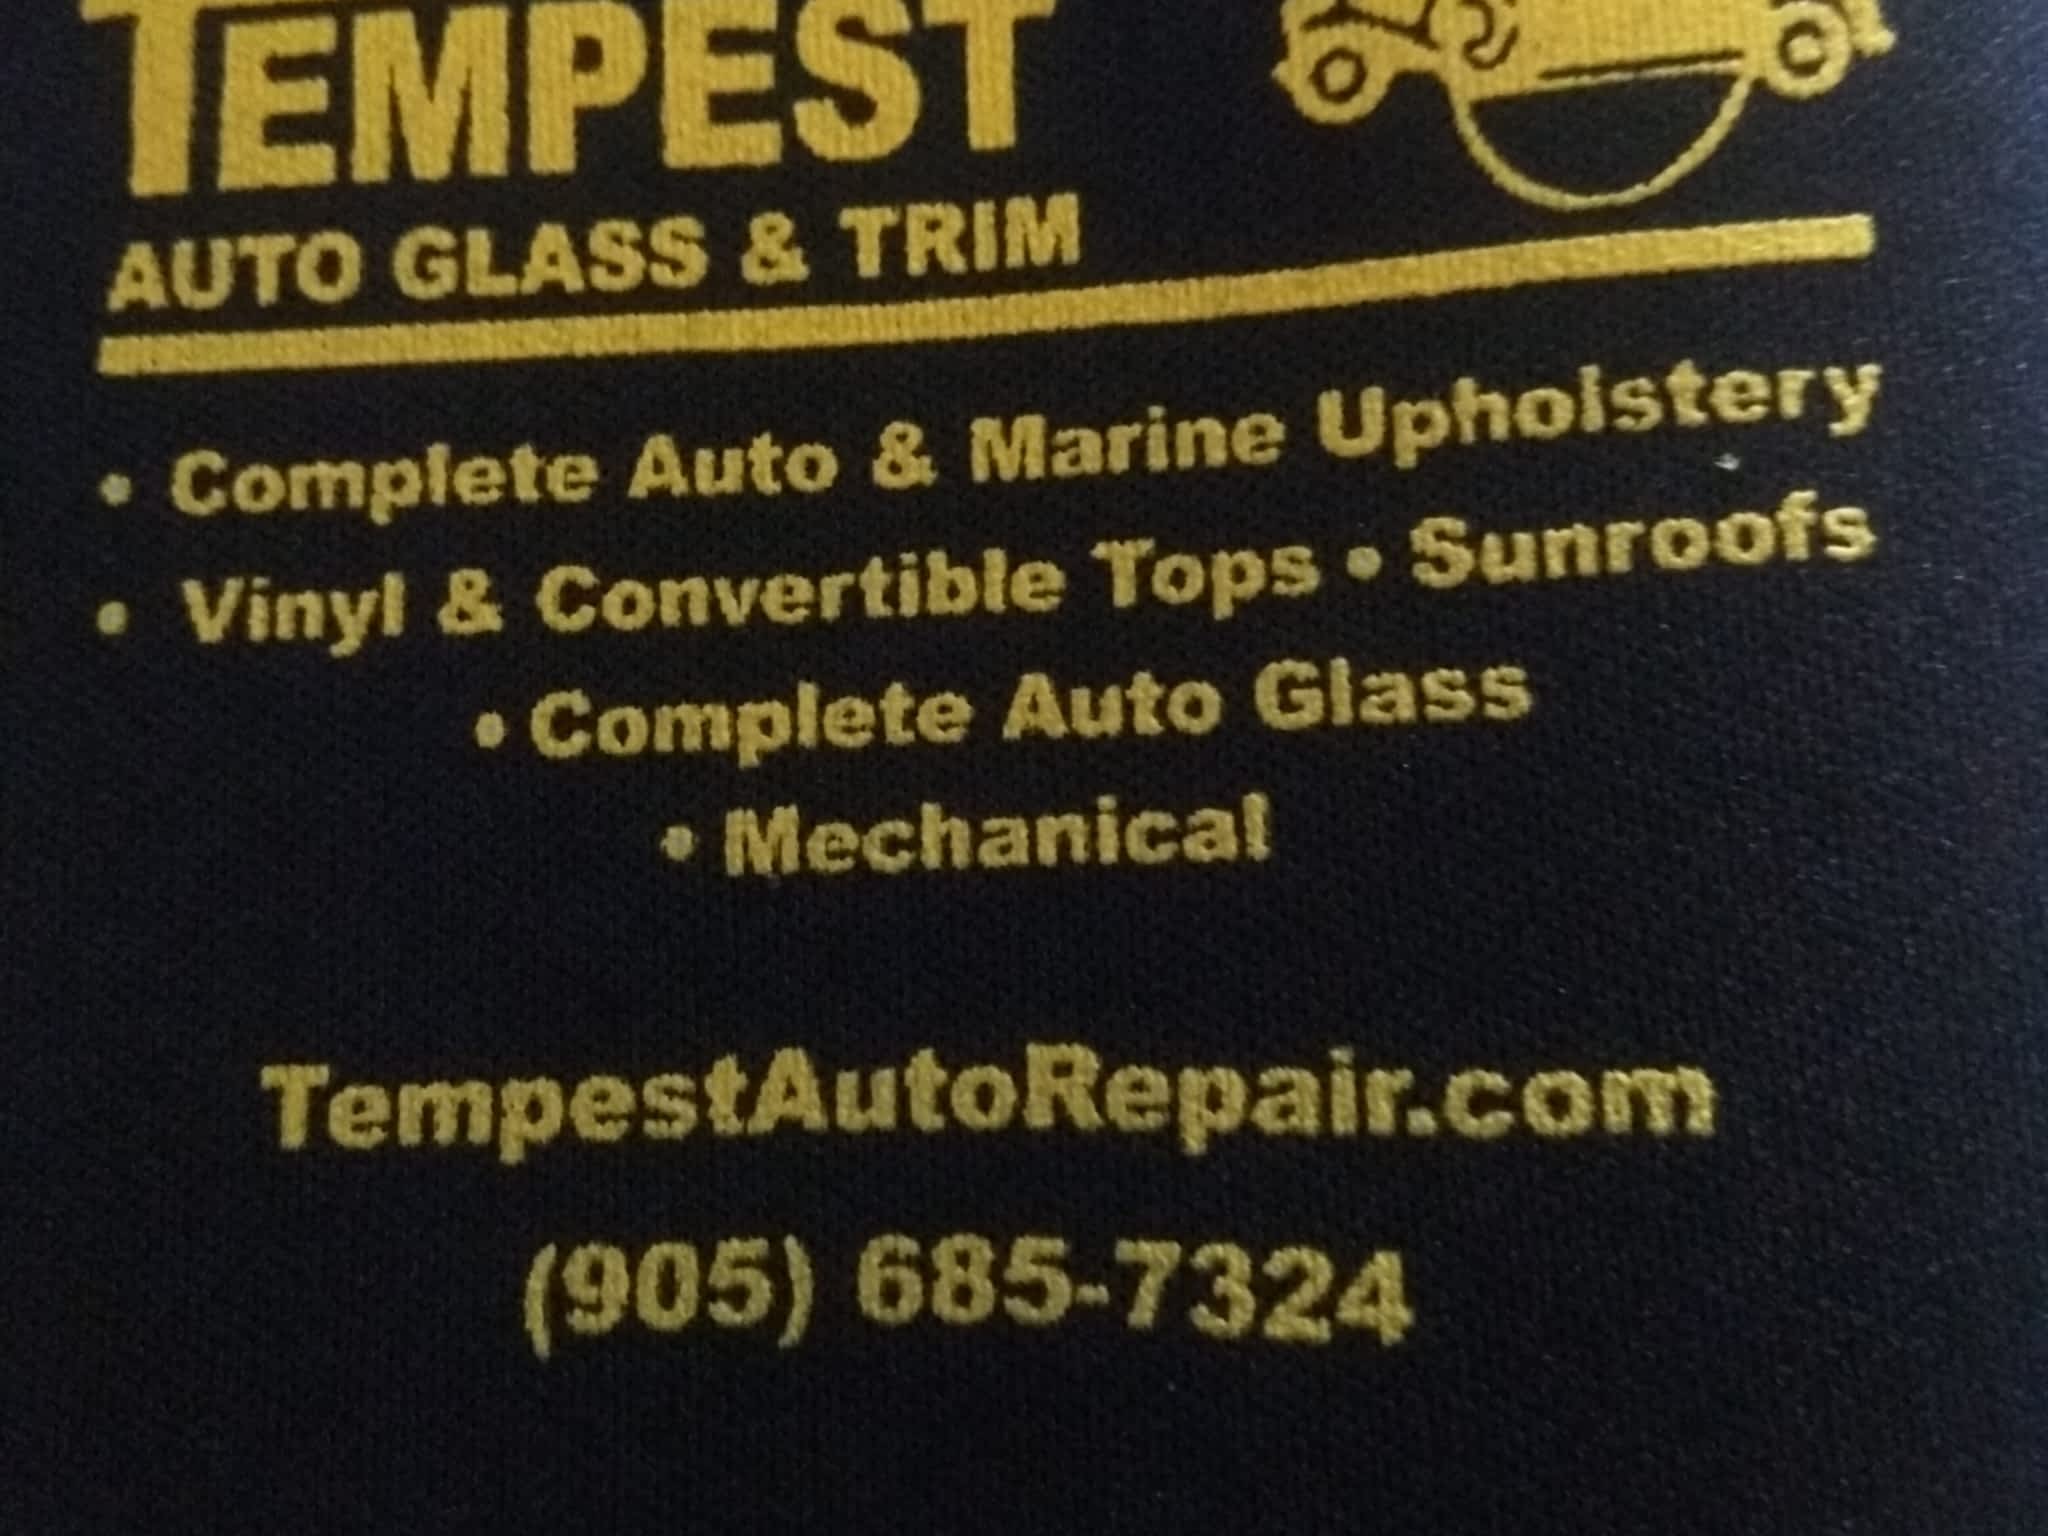 photo Tempest Auto Glass & Trim